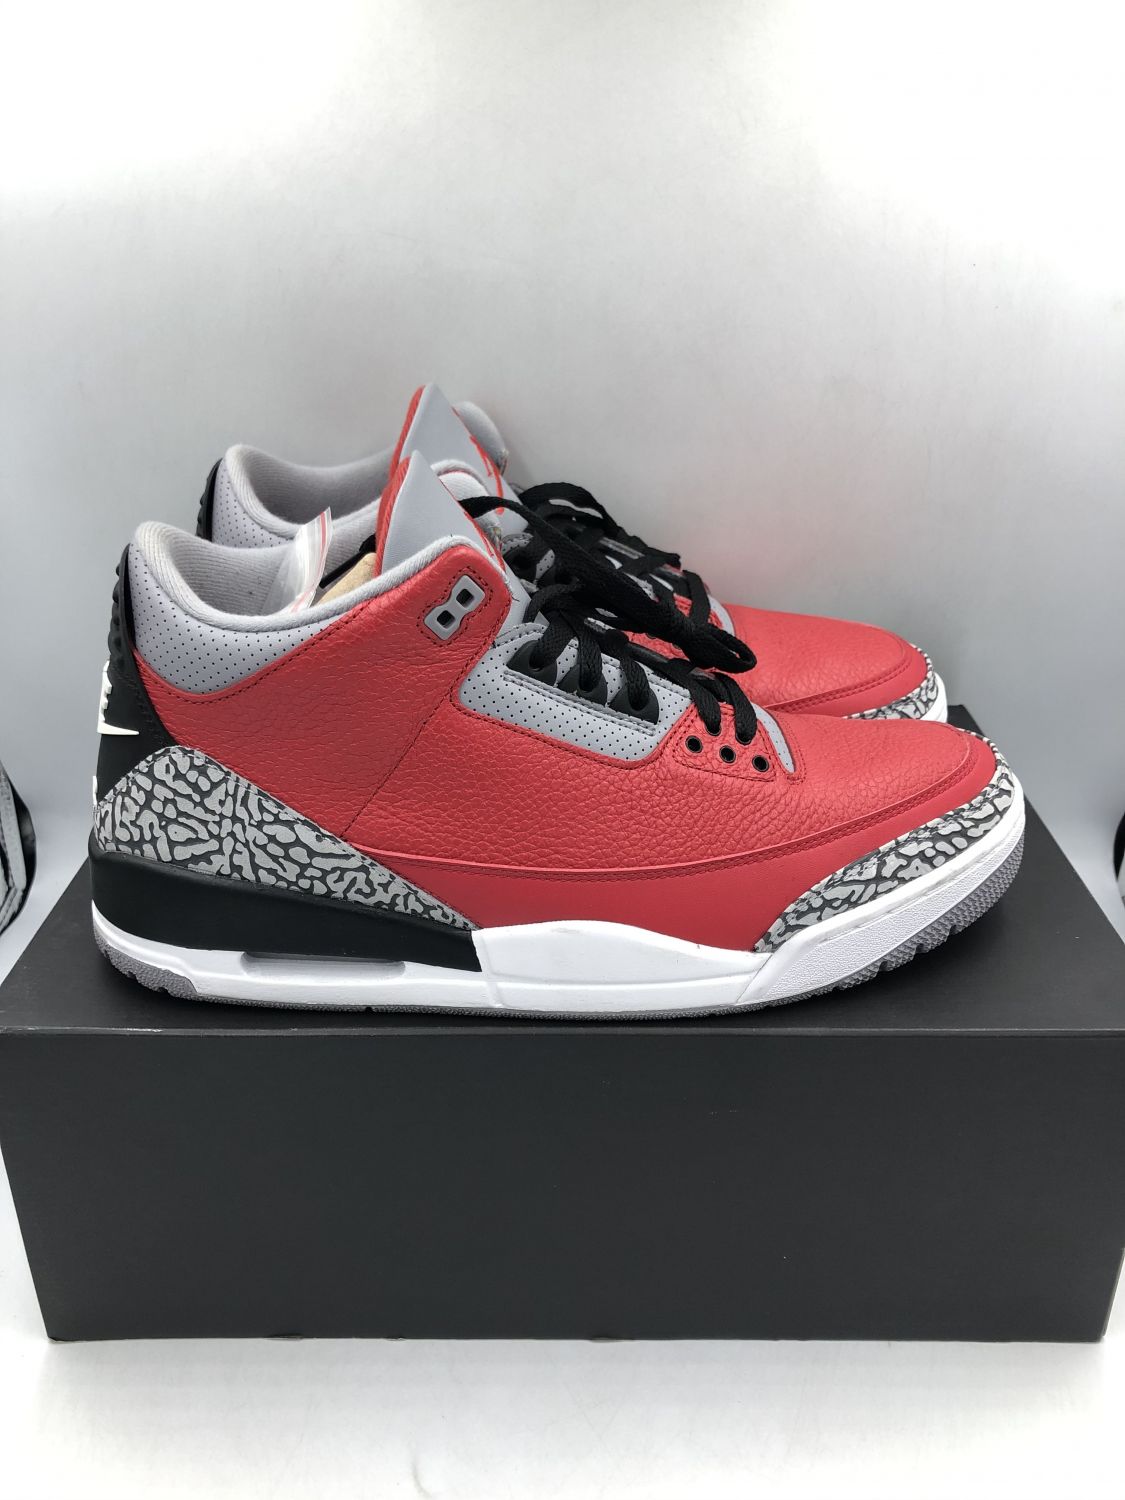 Jordan 3 Retro SE Unite Fire Red | AfterMarket